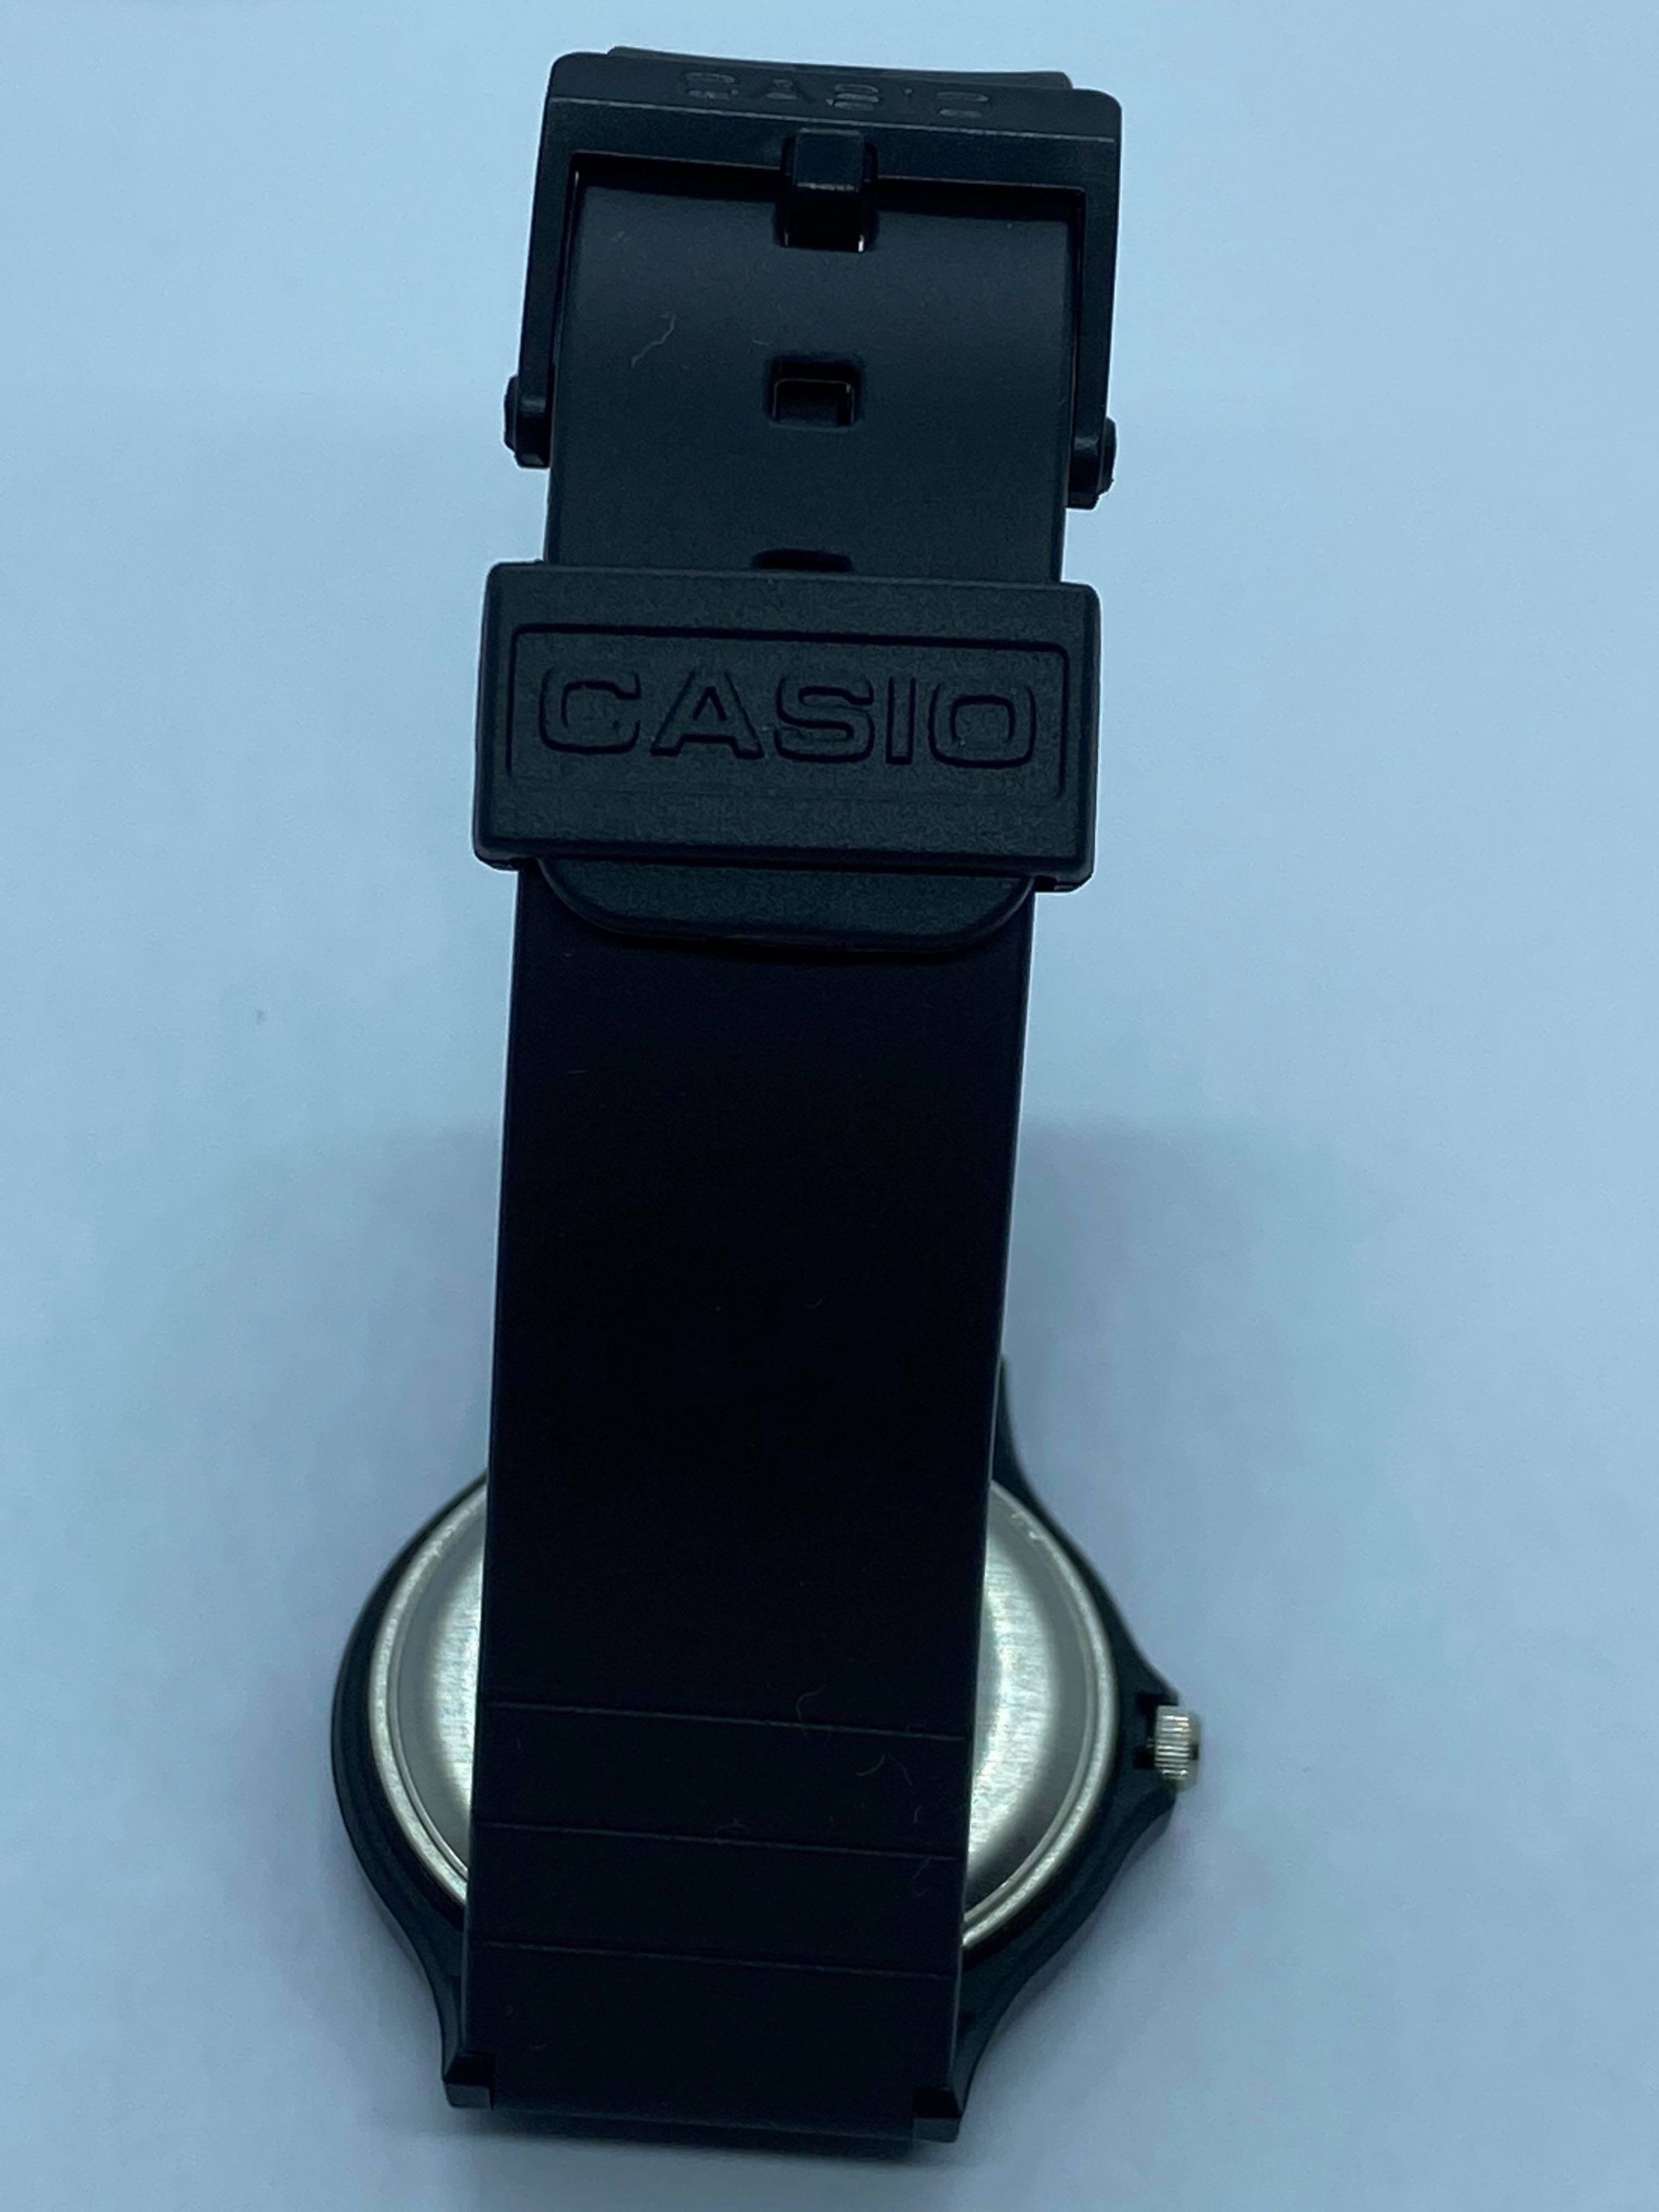 Casio Casio Watch UNISEX Size in wrist 36mm Diameter Rubber Band Size 36 - 7 Thumbnail